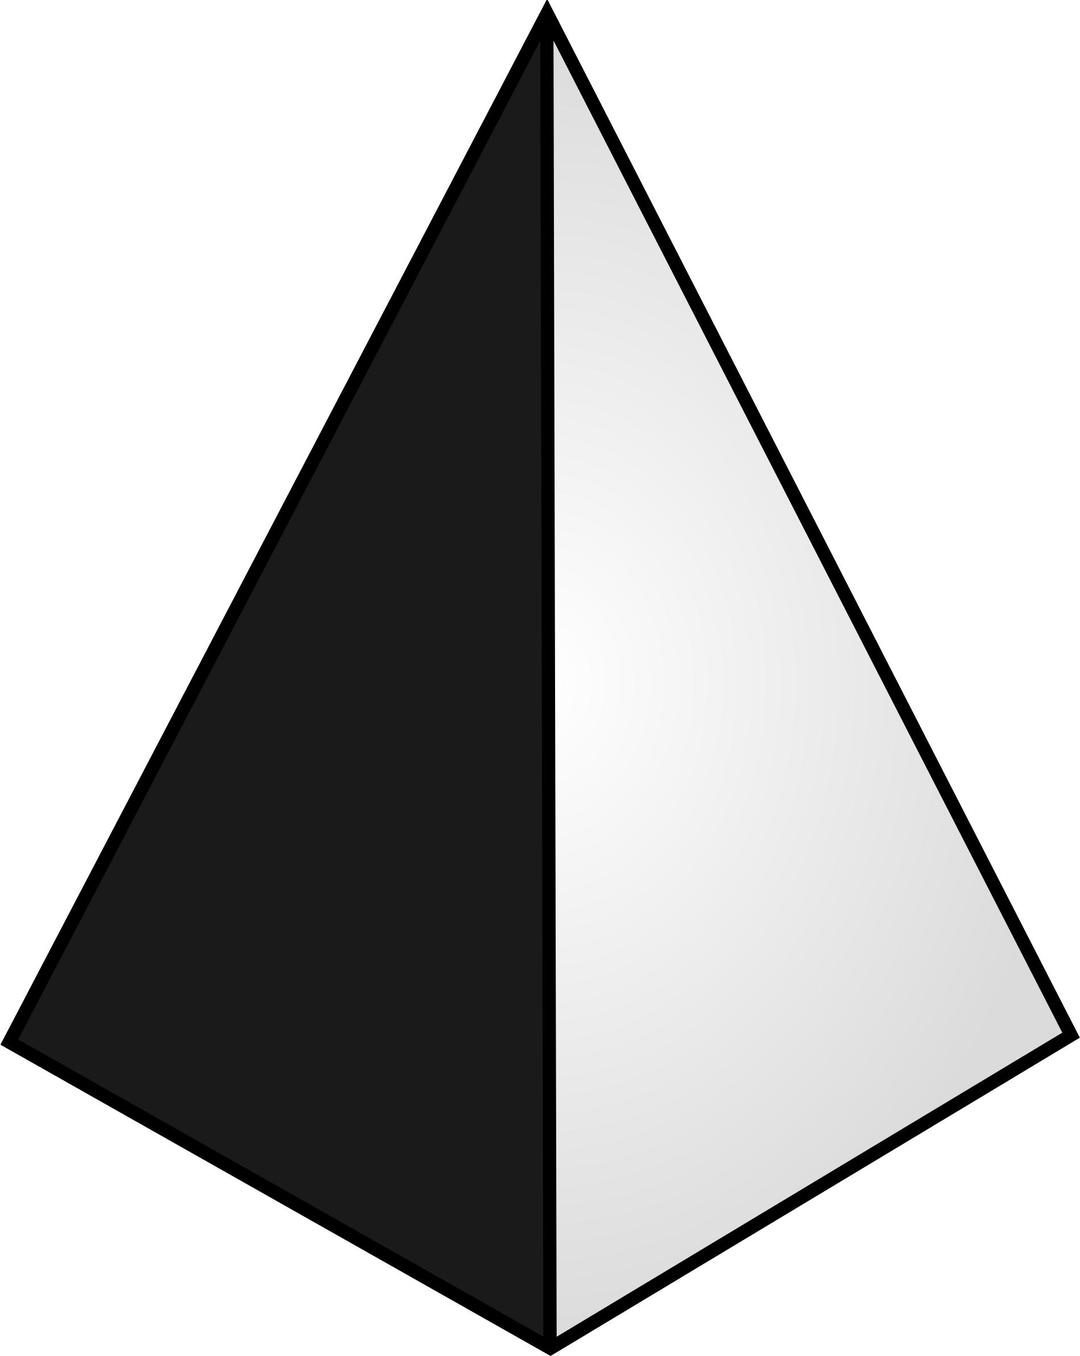 Refactoring pyramid png transparent